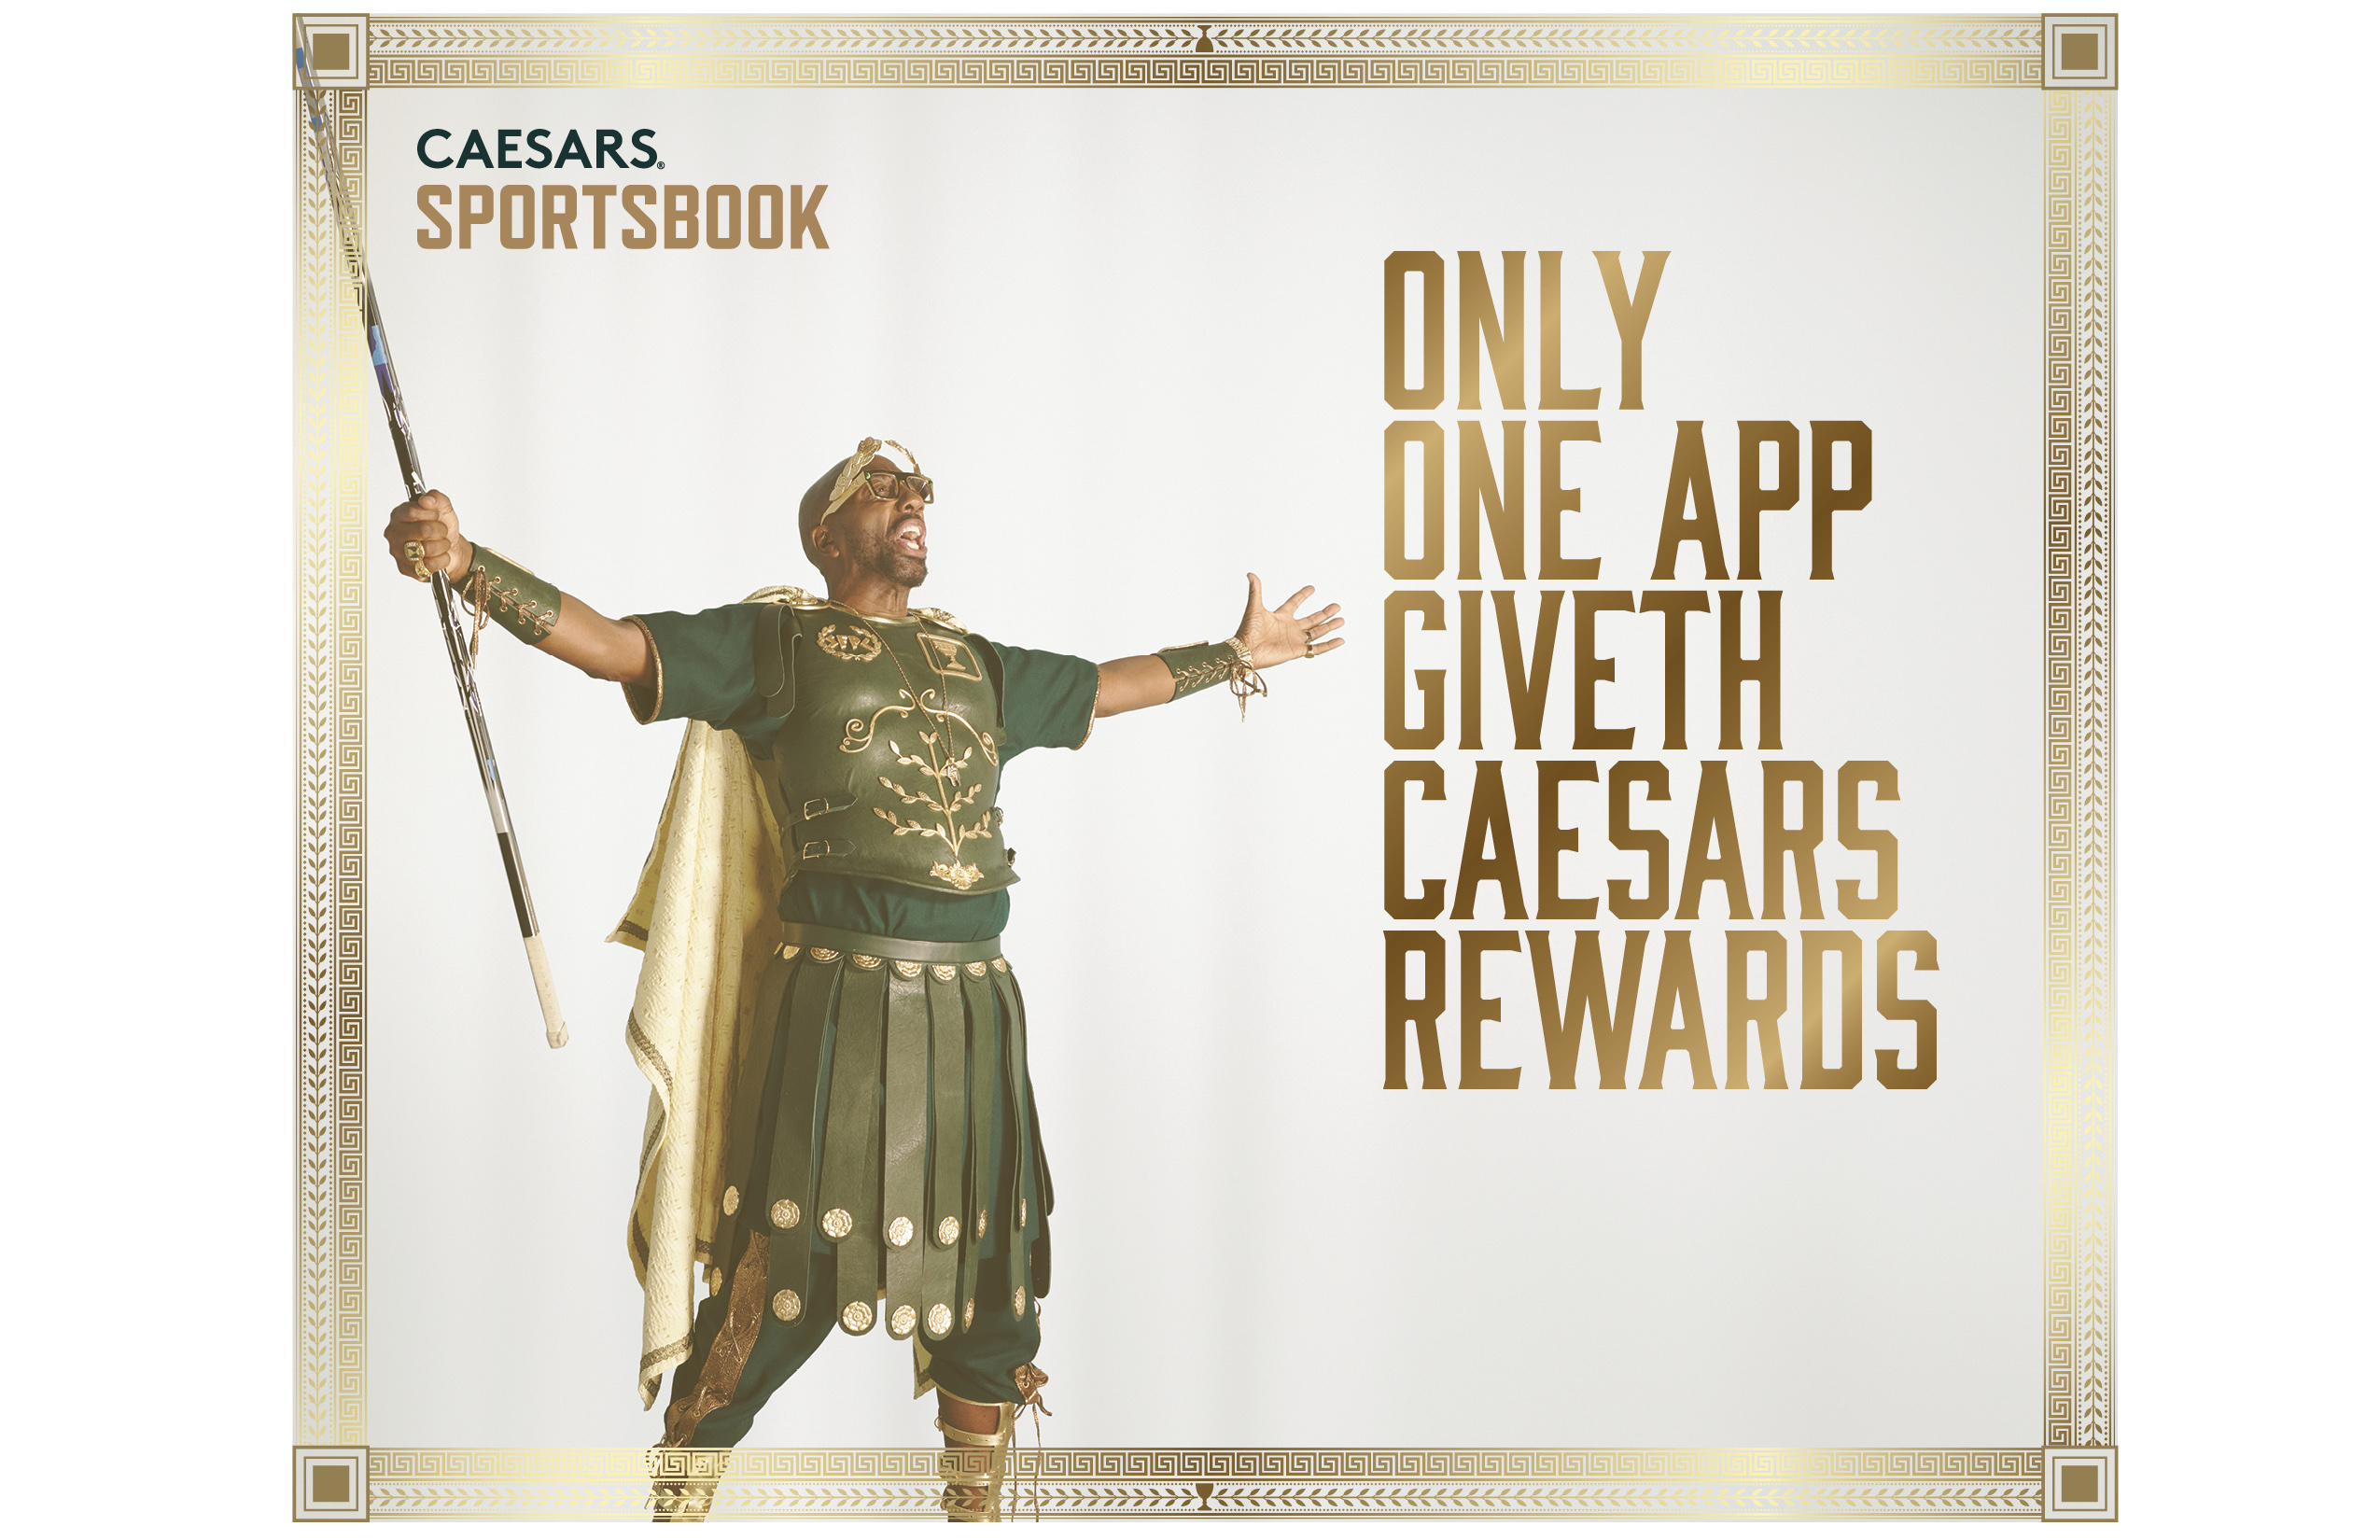 Caesars Sportsbook app earns players VIP experiences through Caesars Rewards.